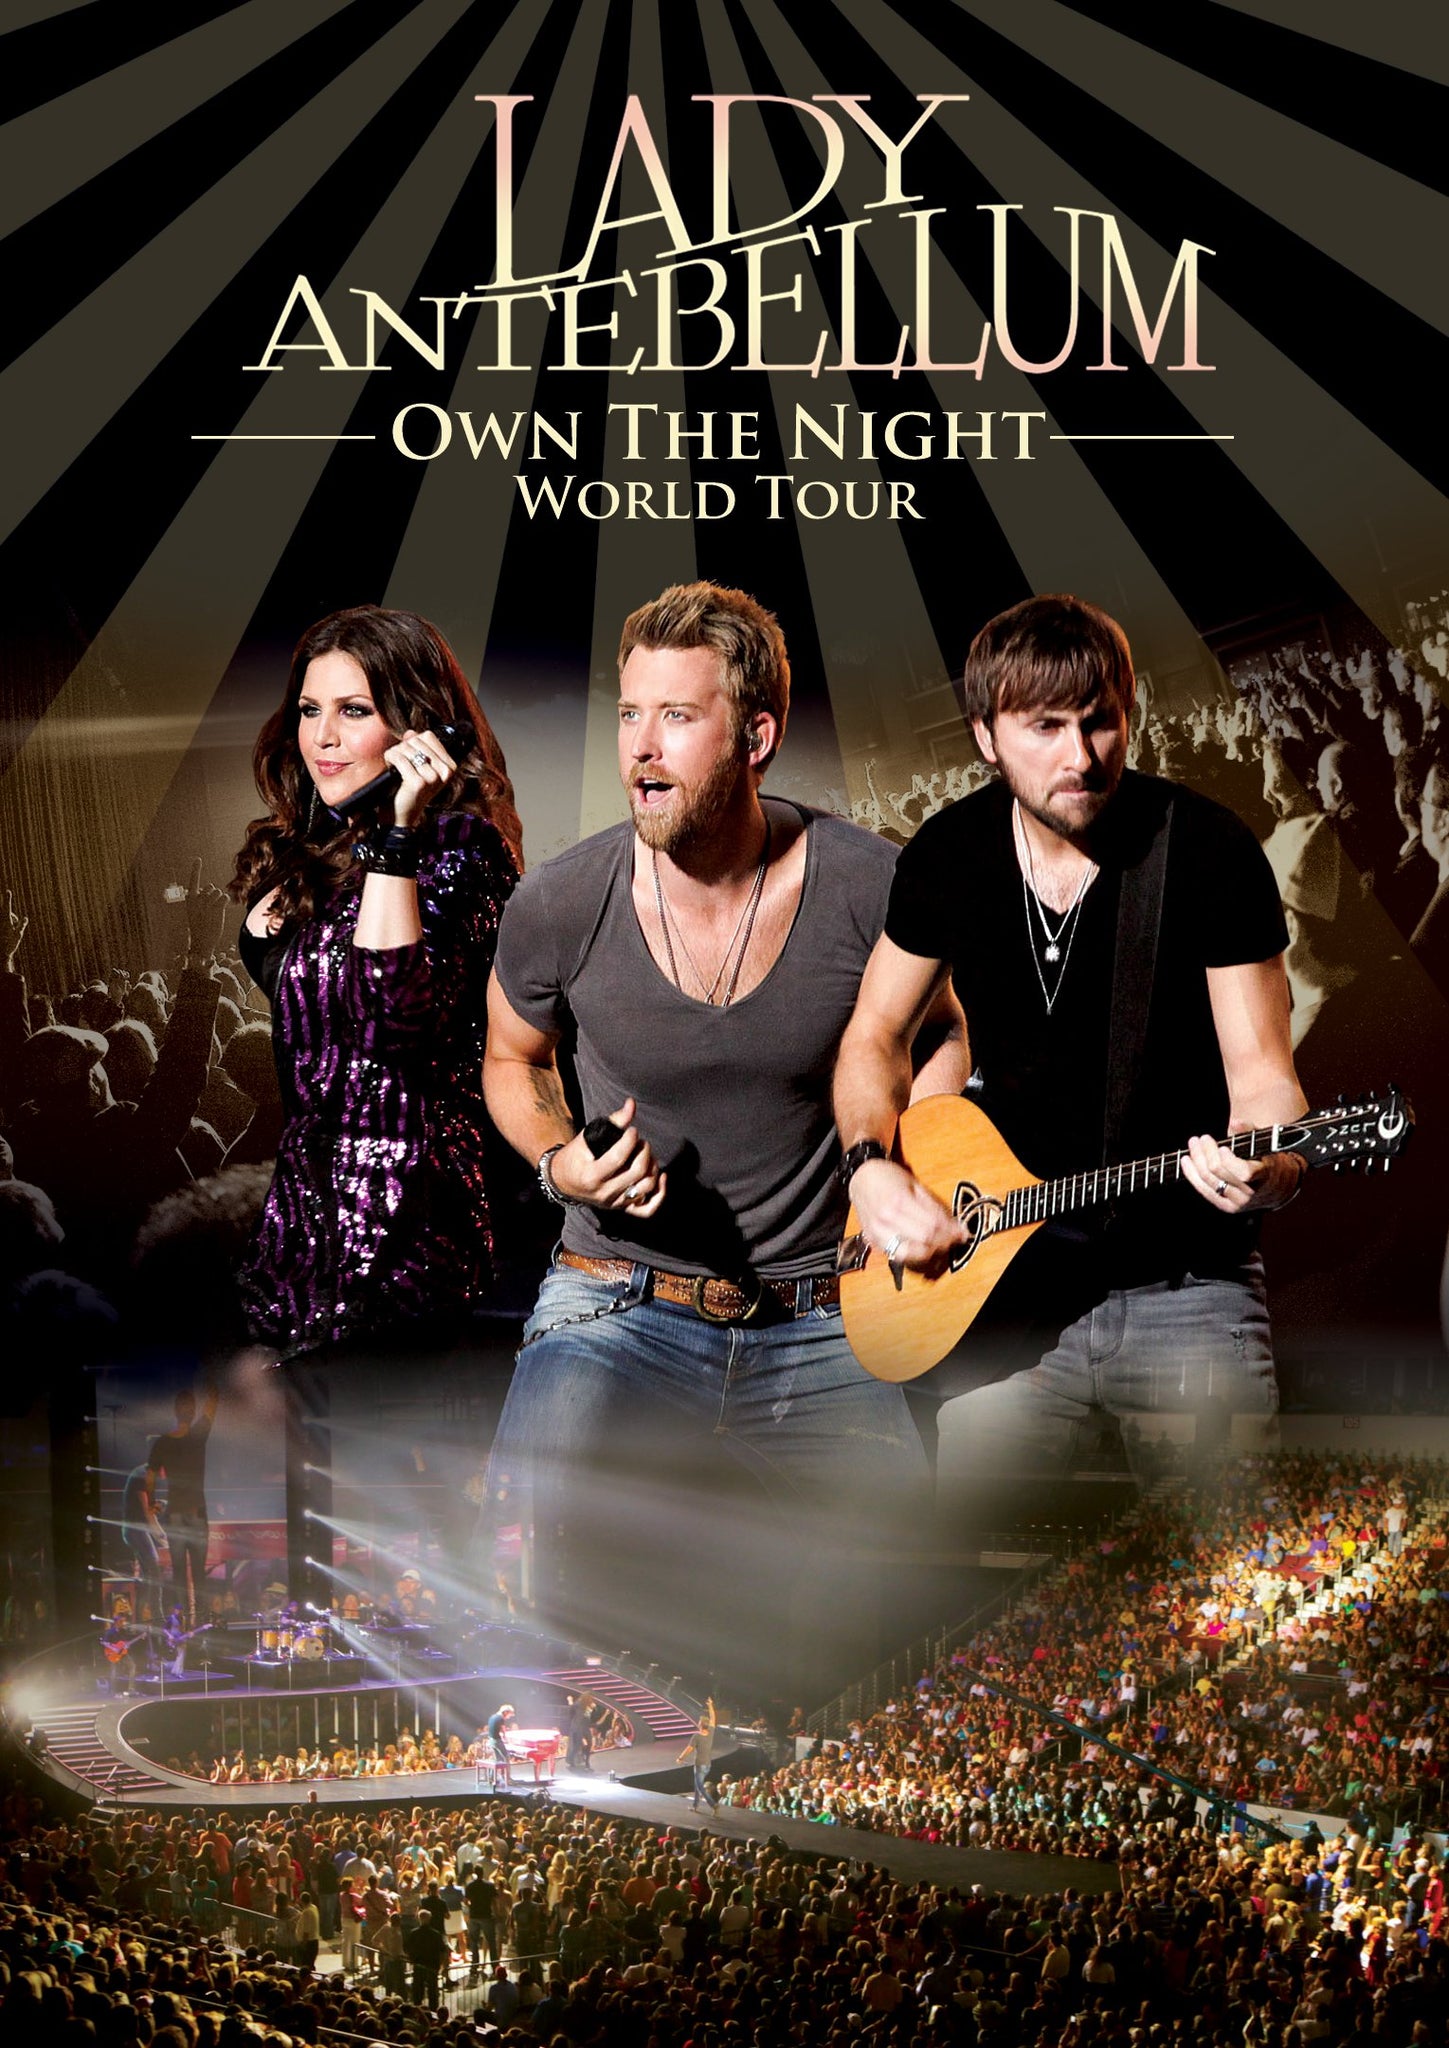 Lady Antebellum Own the Night World Tour DVD